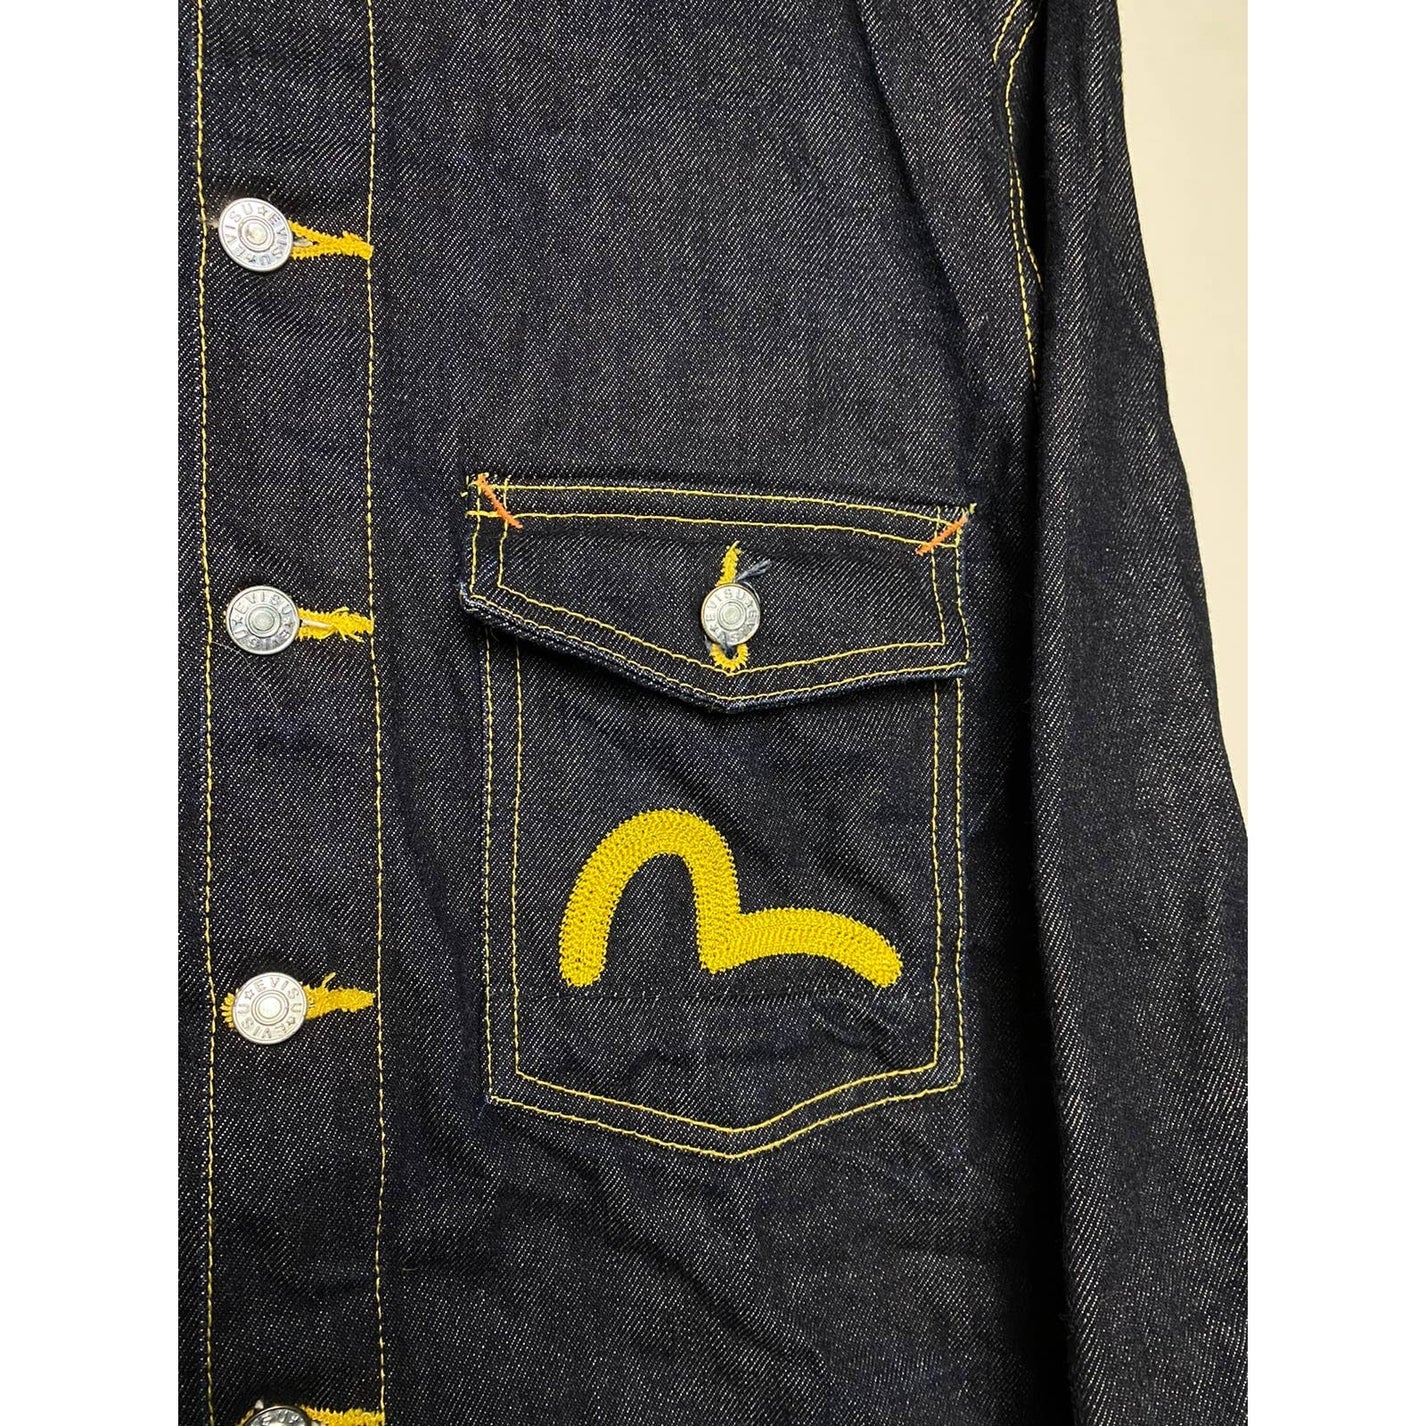 Evisu Japan Vintage Denim Jacket Yellow Seagulls Lodz Polska Front2